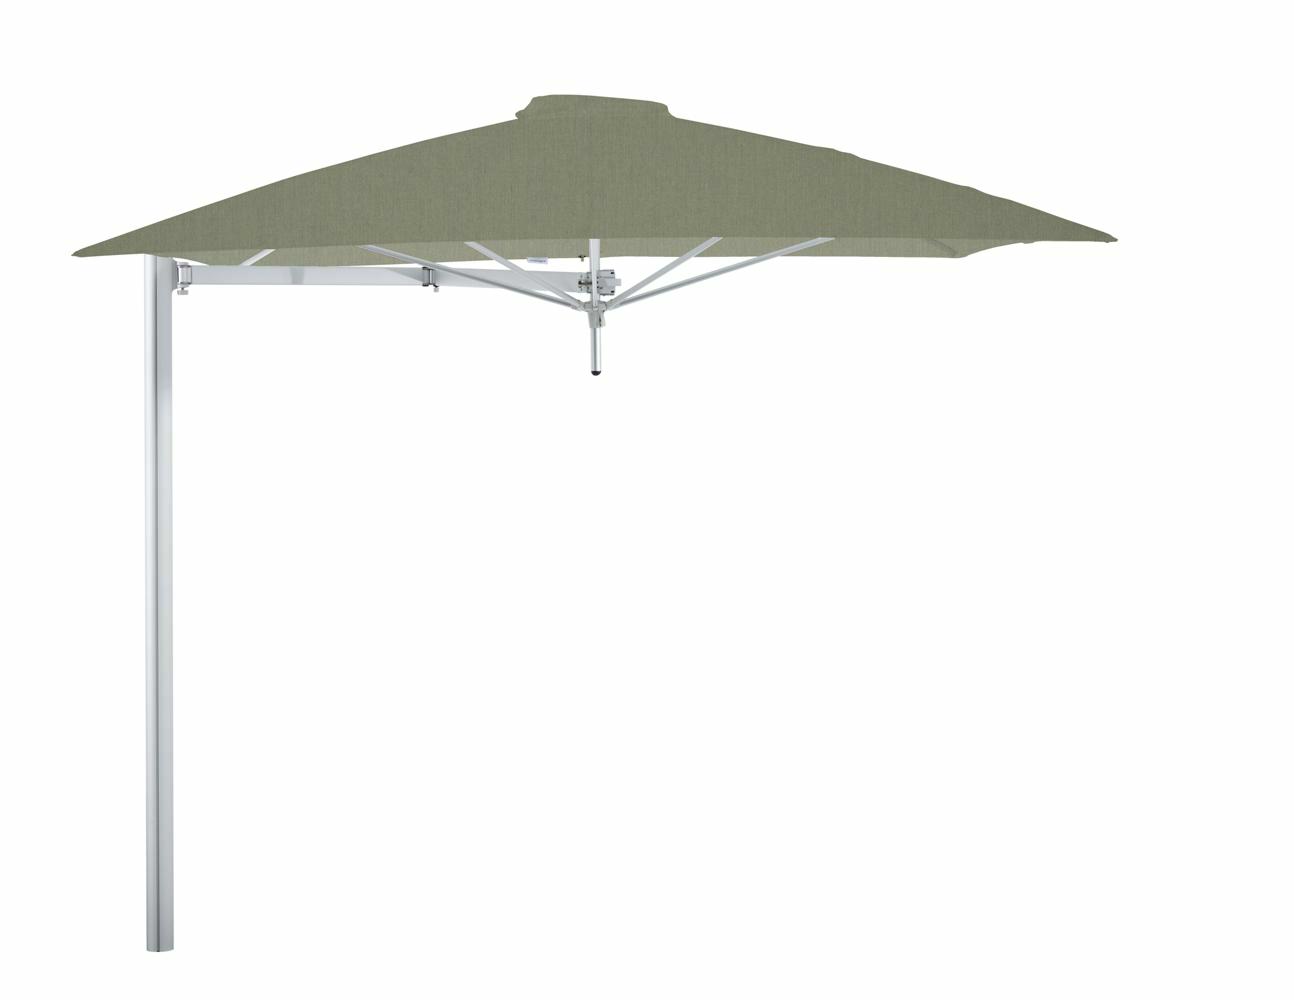 Paraflex cantilever umbrella square 2,3 m with Almond fabric and a Neo arm